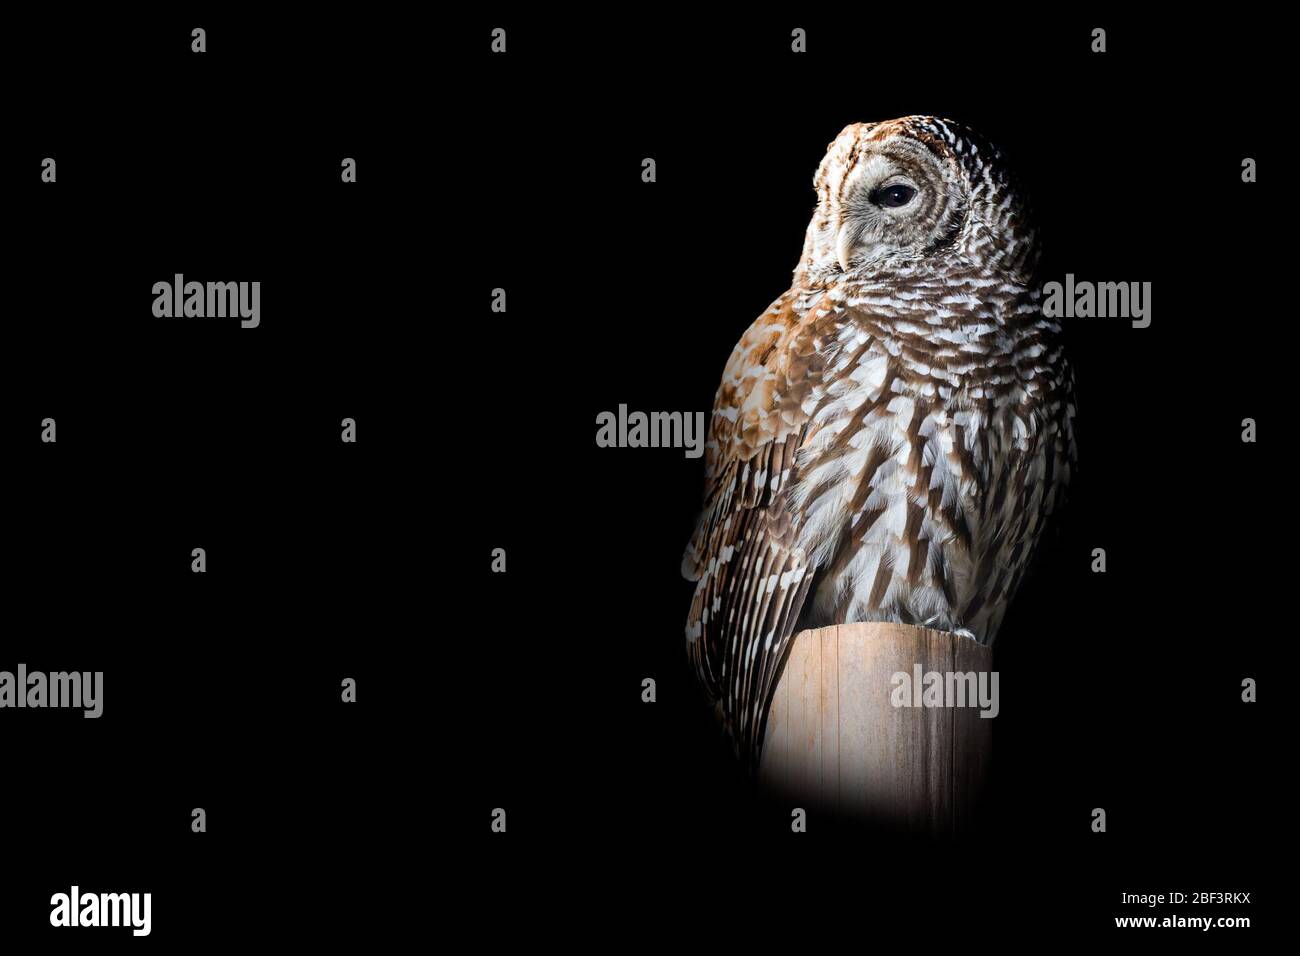 Barred Owl. Species: varia,Genus: Strix,Family: Strigidae,Order: Strigiformes,Class: Aves,Phylum: Chordata,Kingdom: Animalia,Barred Owl,Owl,Bird Stock Photo